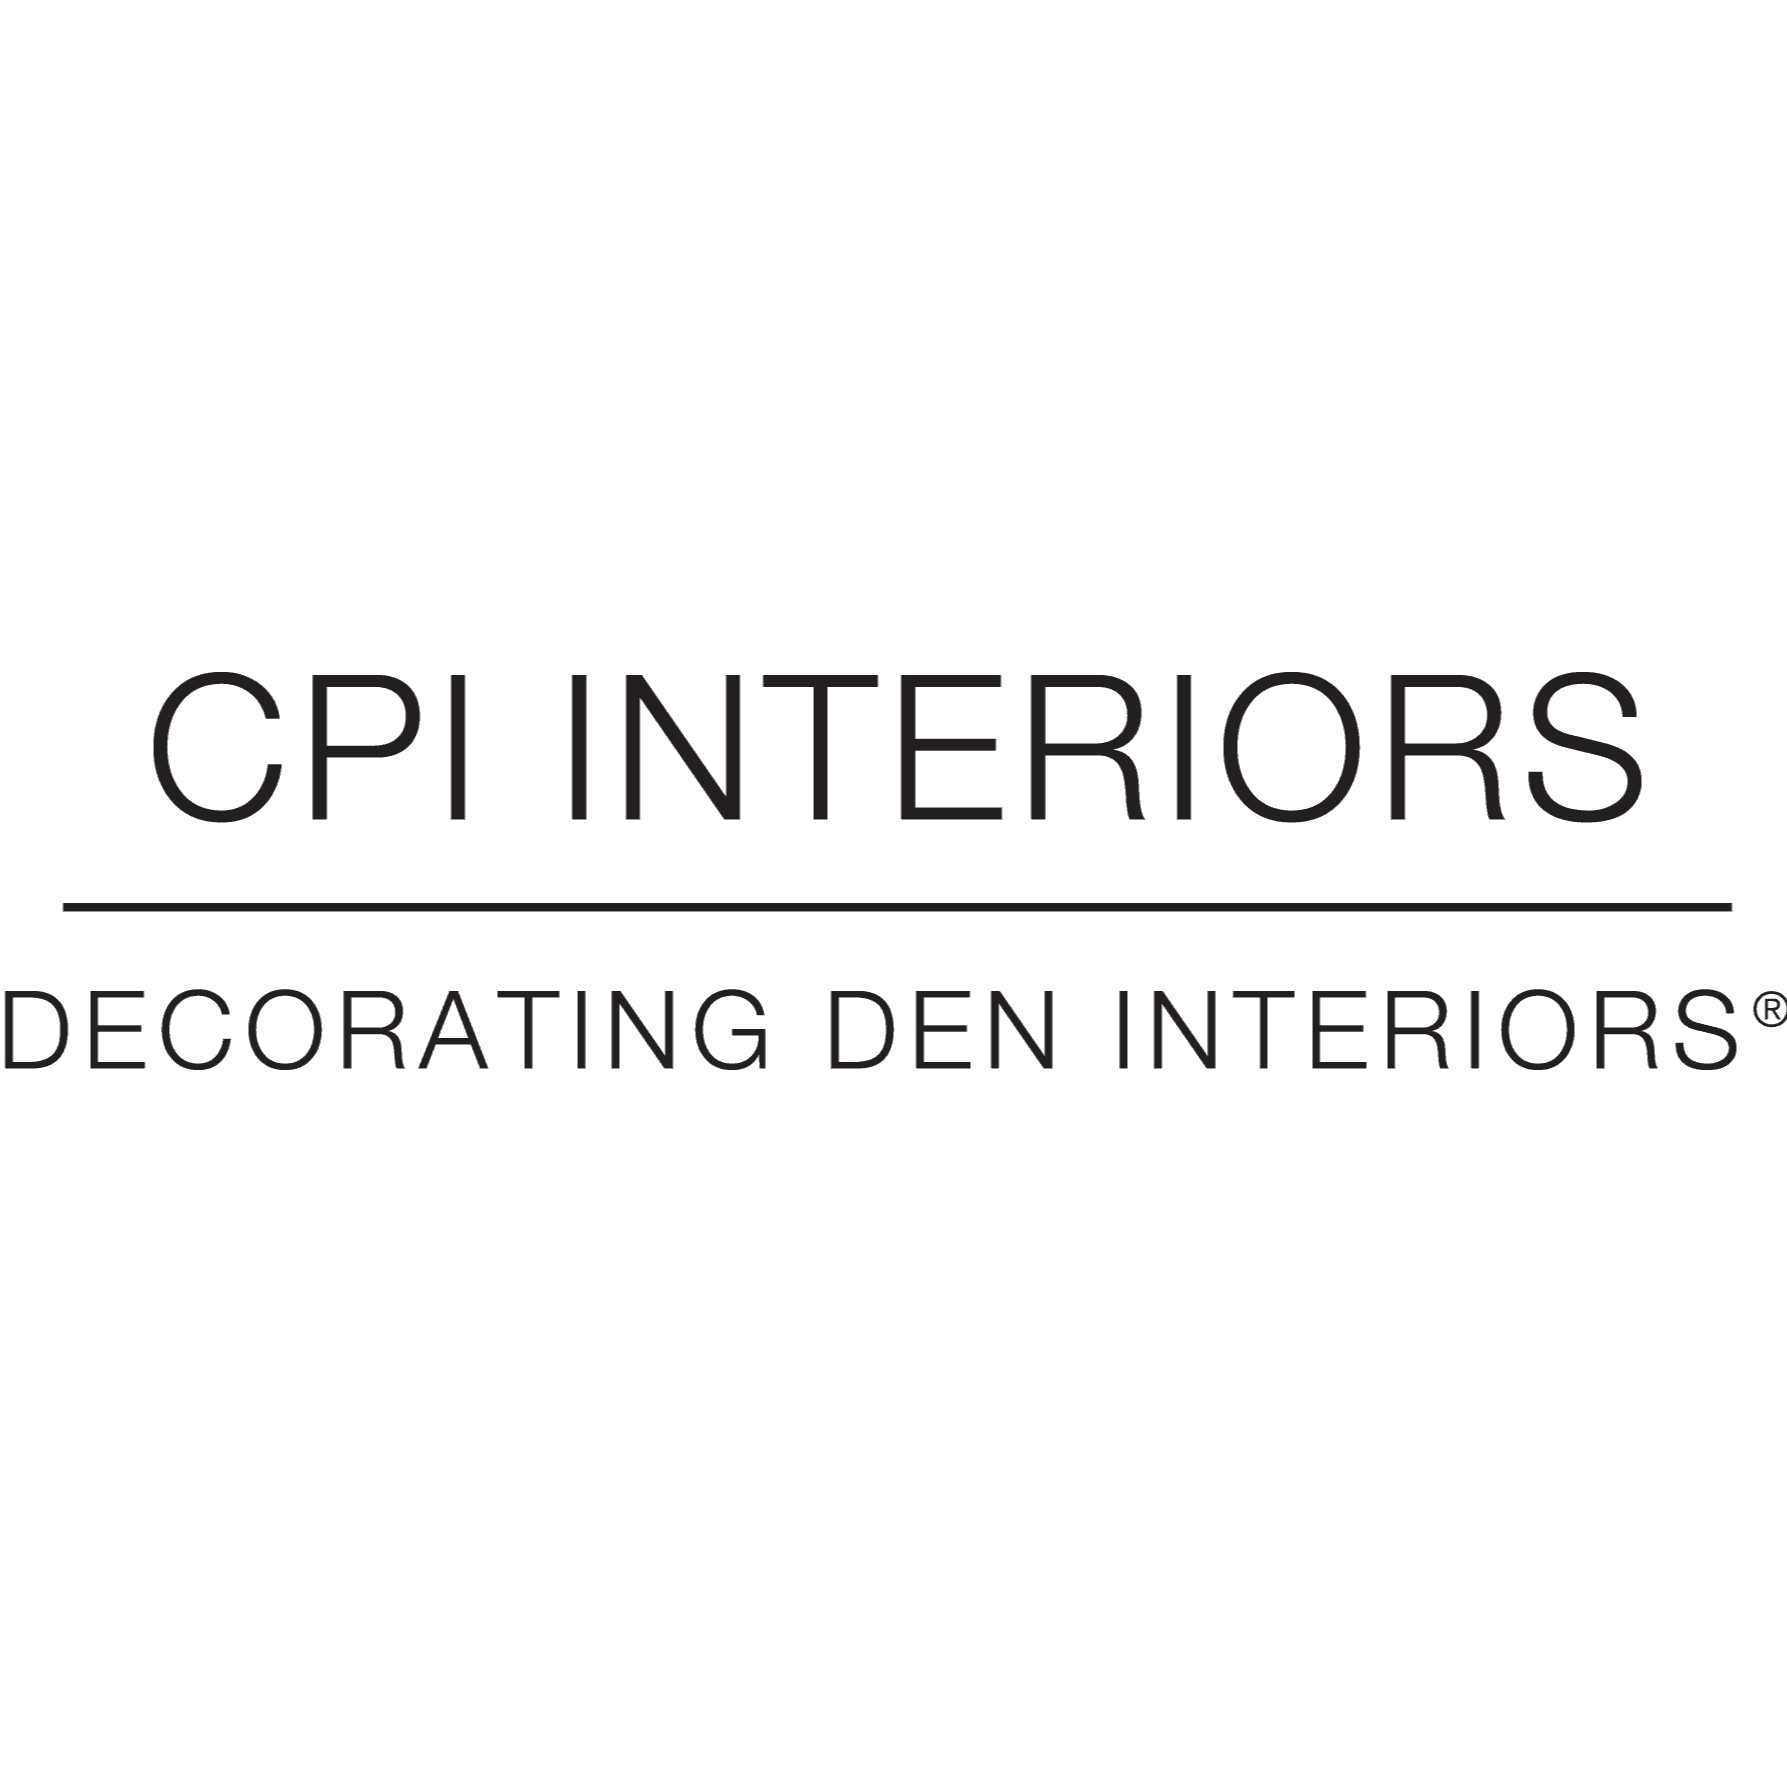 <p><a href="https://cpi.decoratingden.com/" rel="noopener noreferrer" target="_blank" style="color: rgb(0, 55, 0);">CPI Interiors</a></p> logo